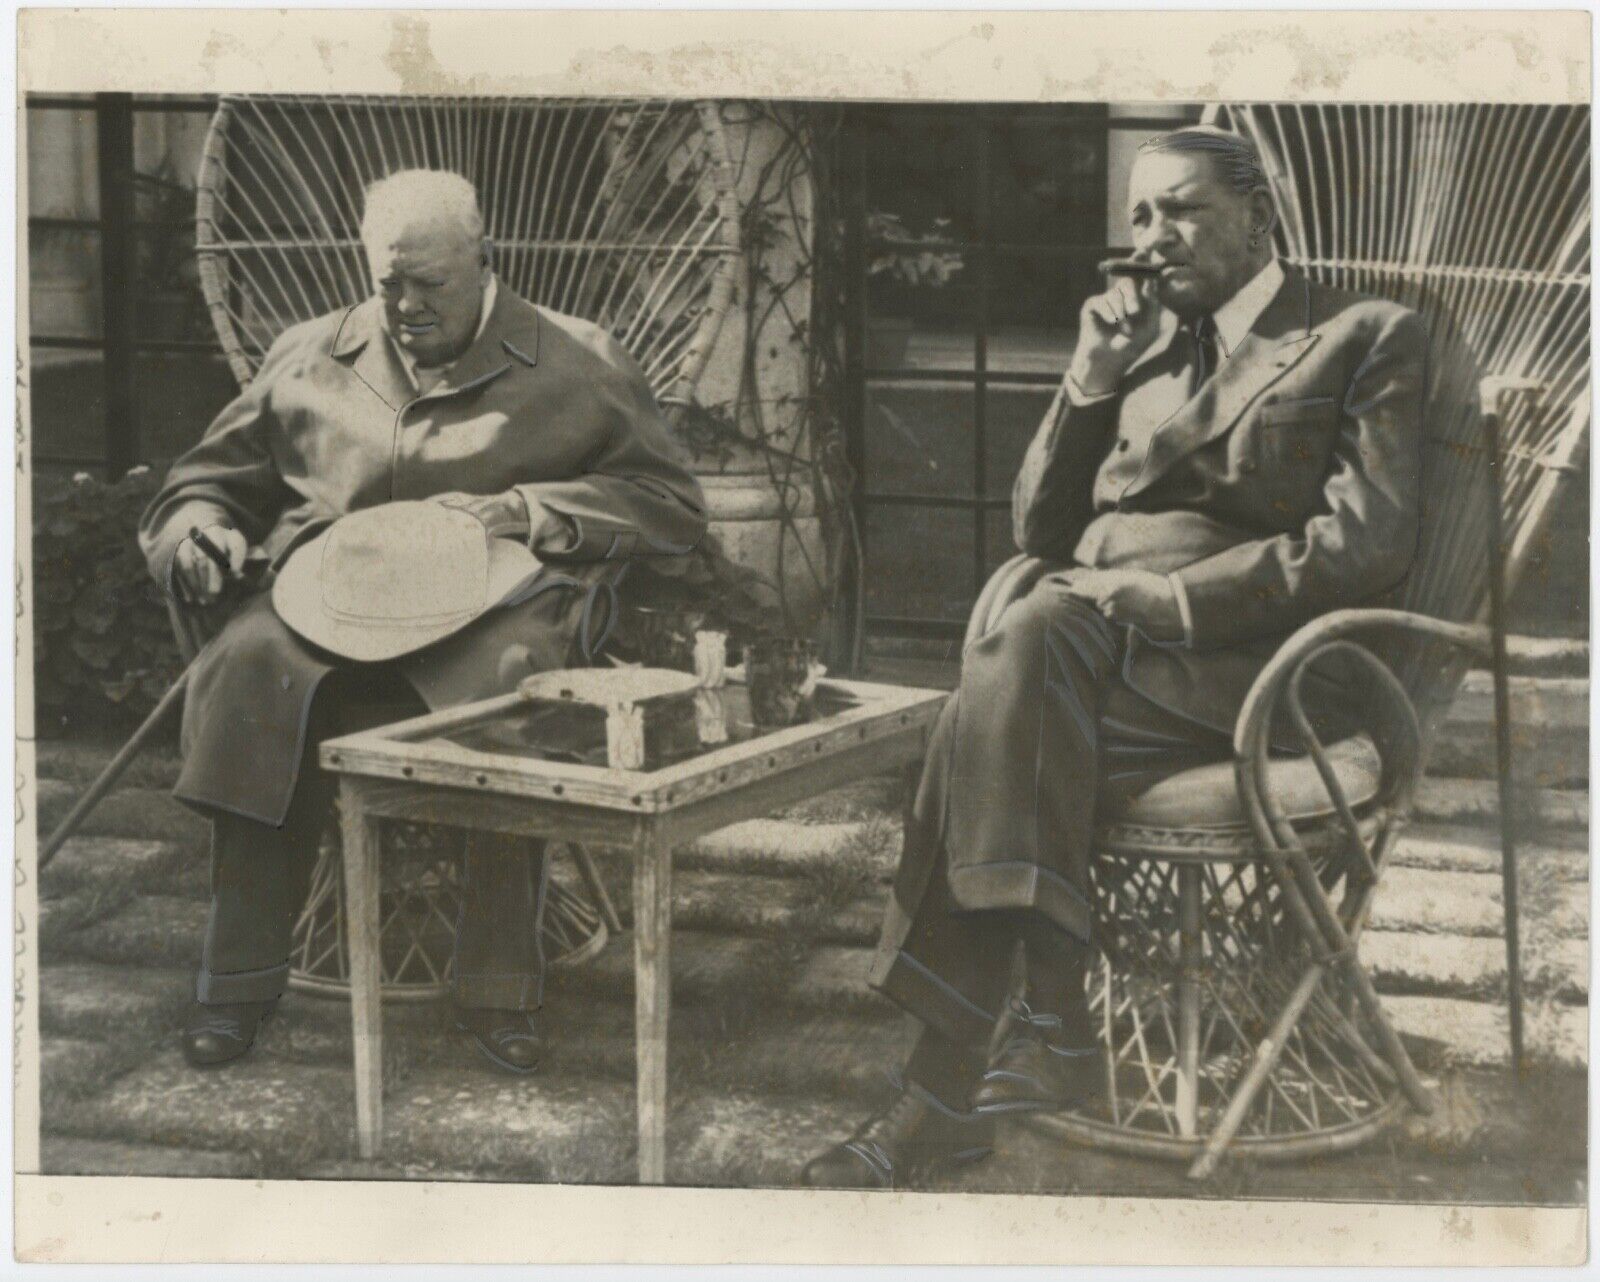 5 April 1959 press photo of Sir Winston S. Churchill at La Pausa in France